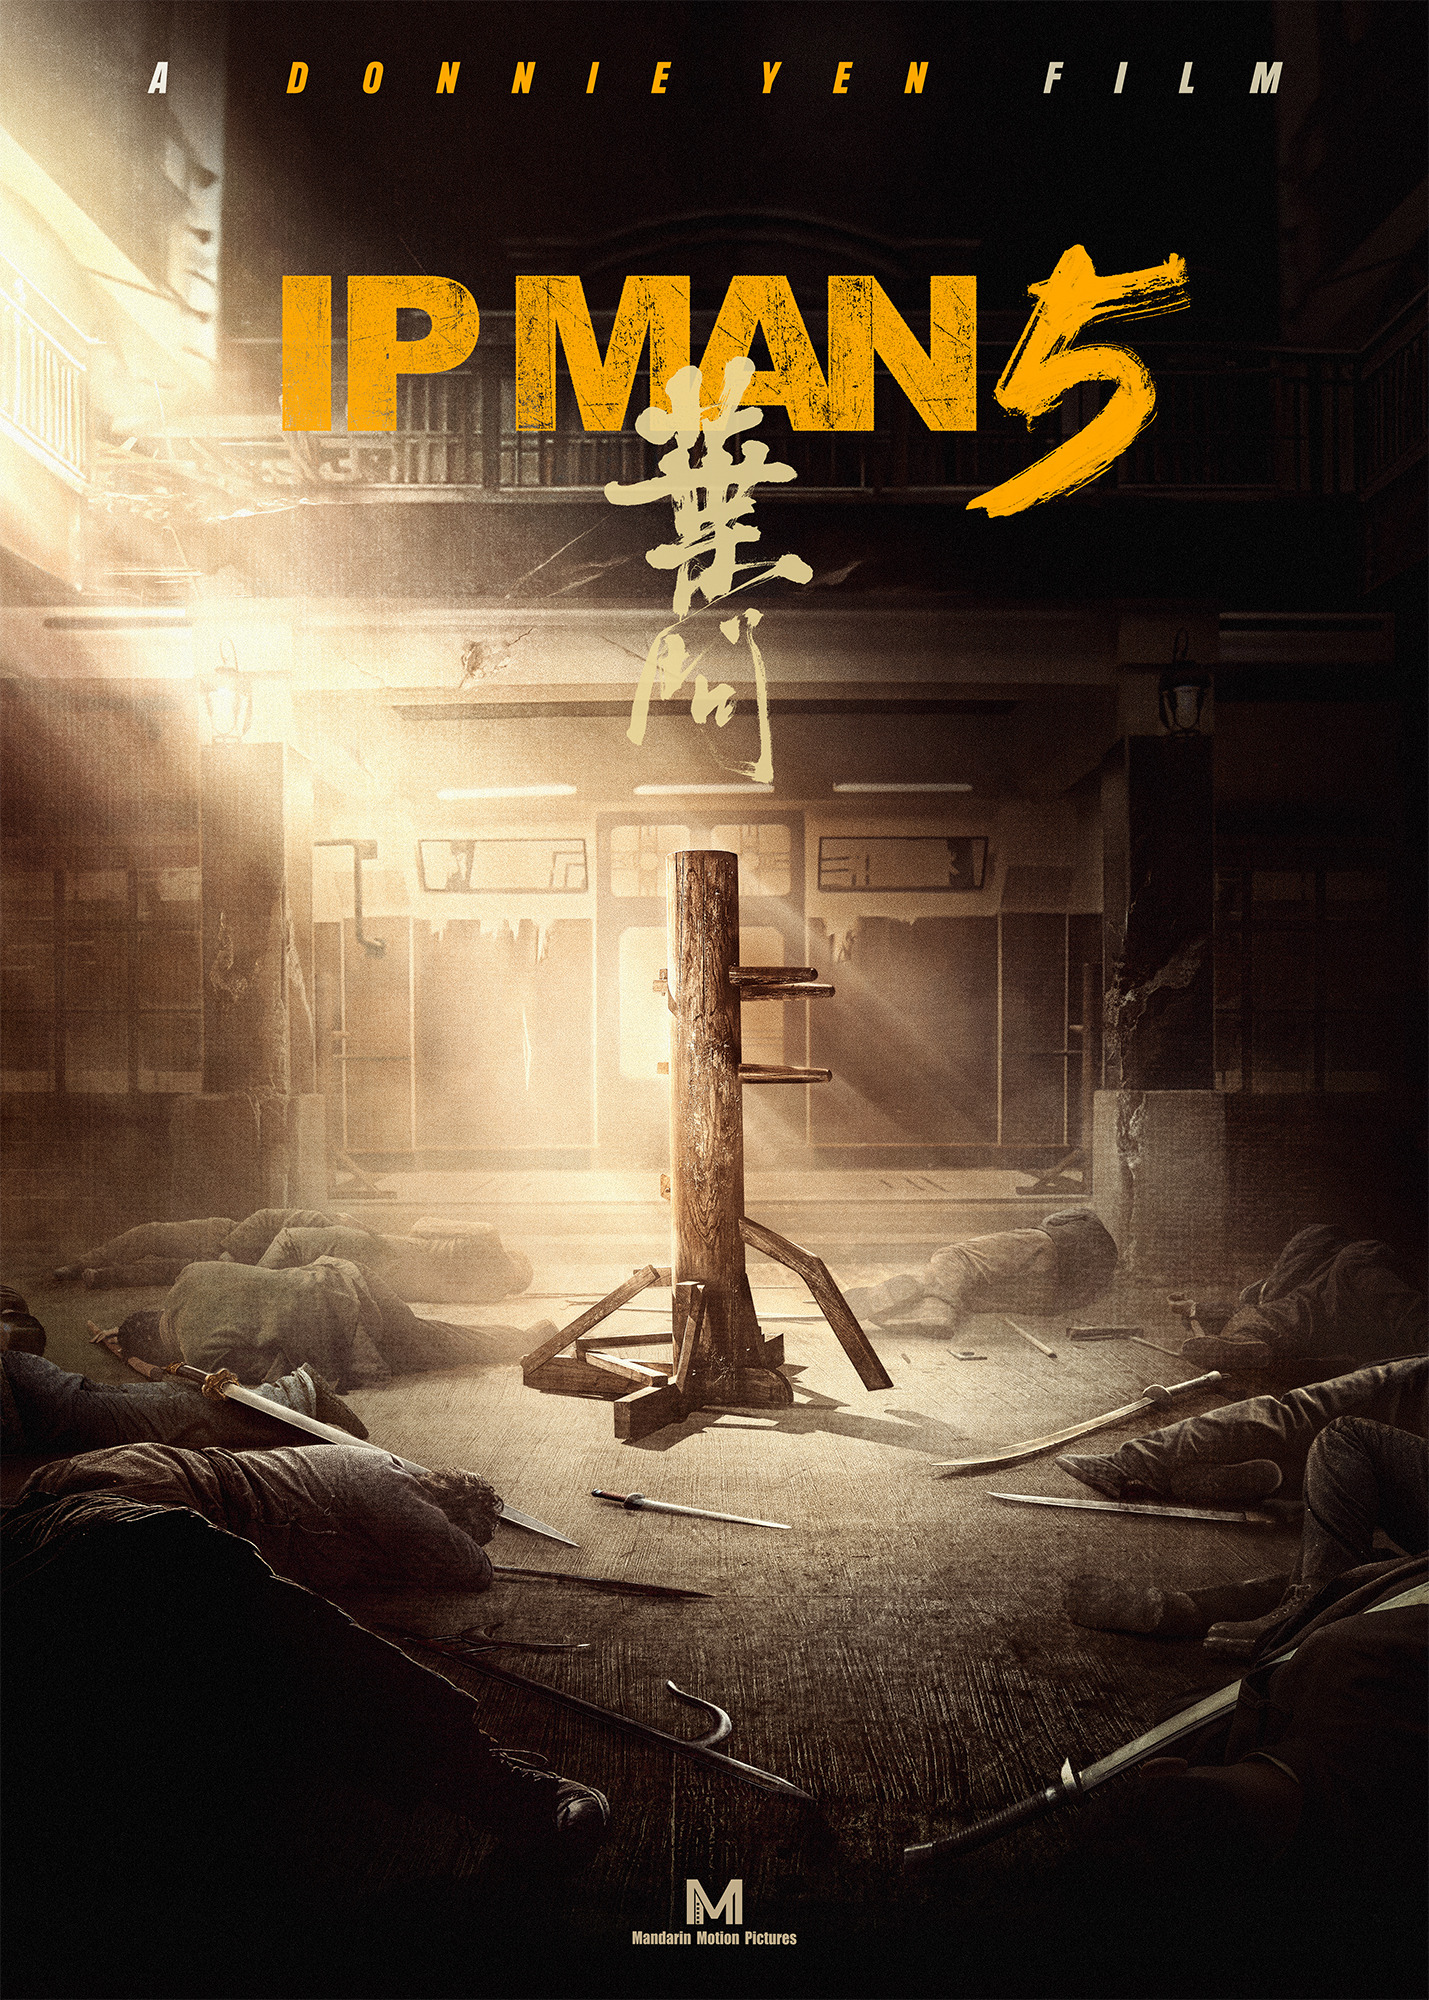 Mega Sized Movie Poster Image for Ip Man 5 